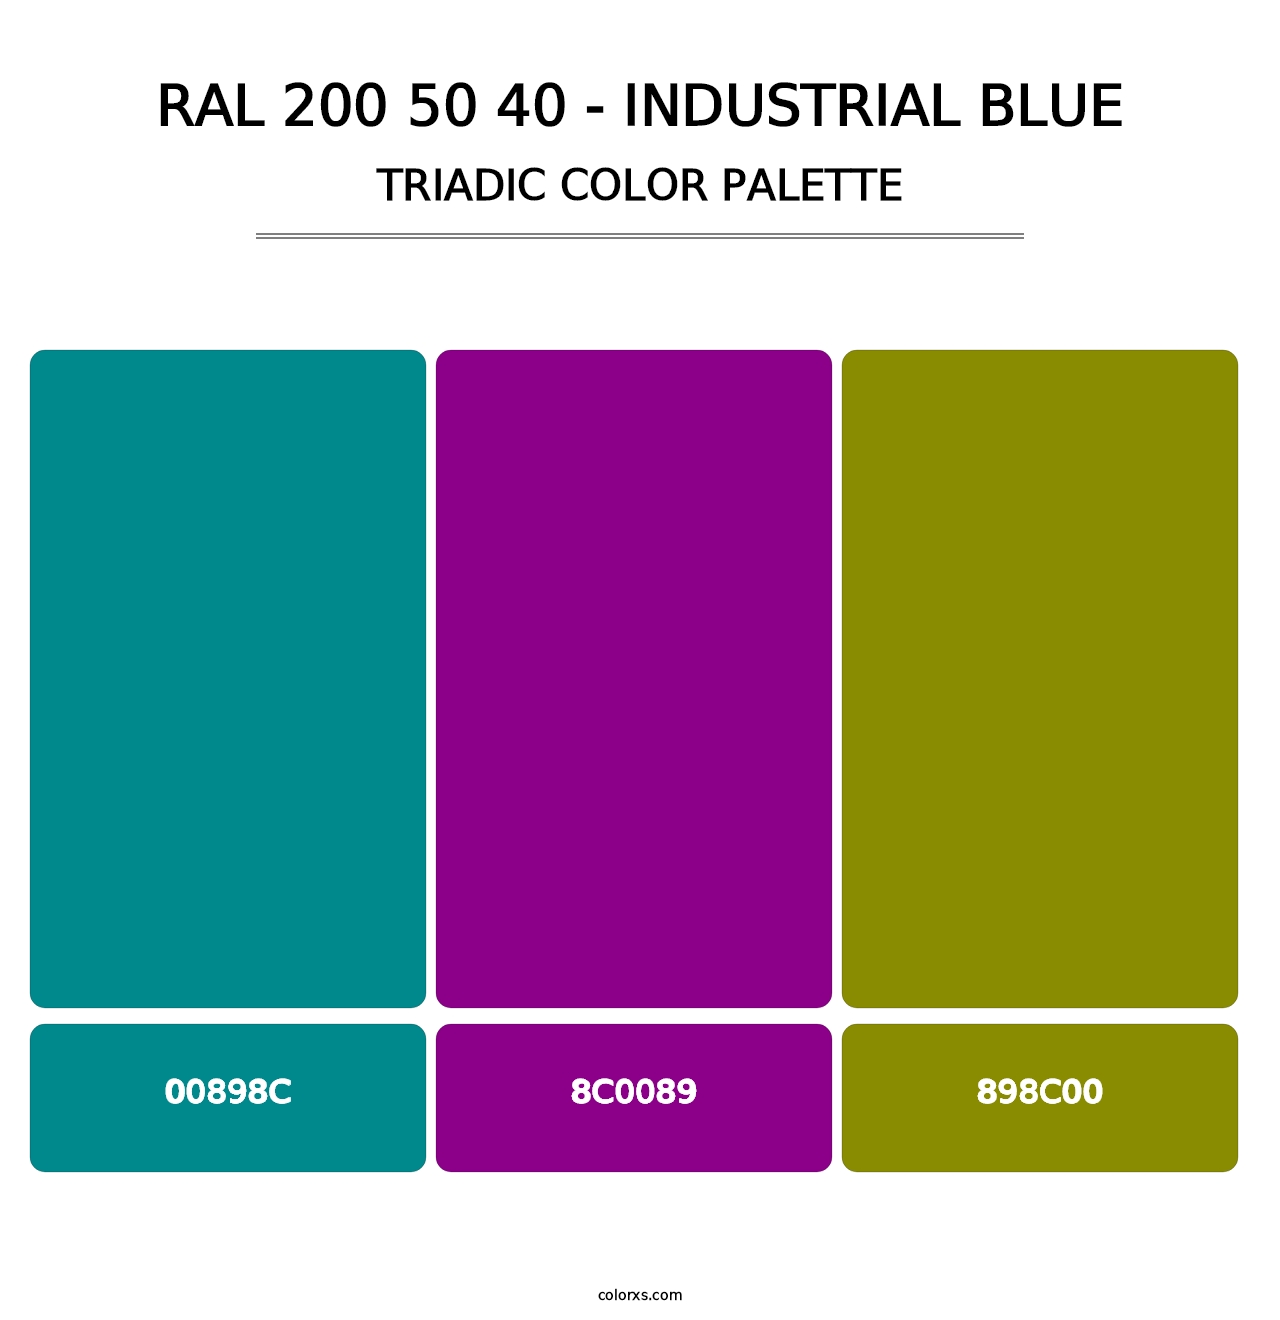 RAL 200 50 40 - Industrial Blue - Triadic Color Palette